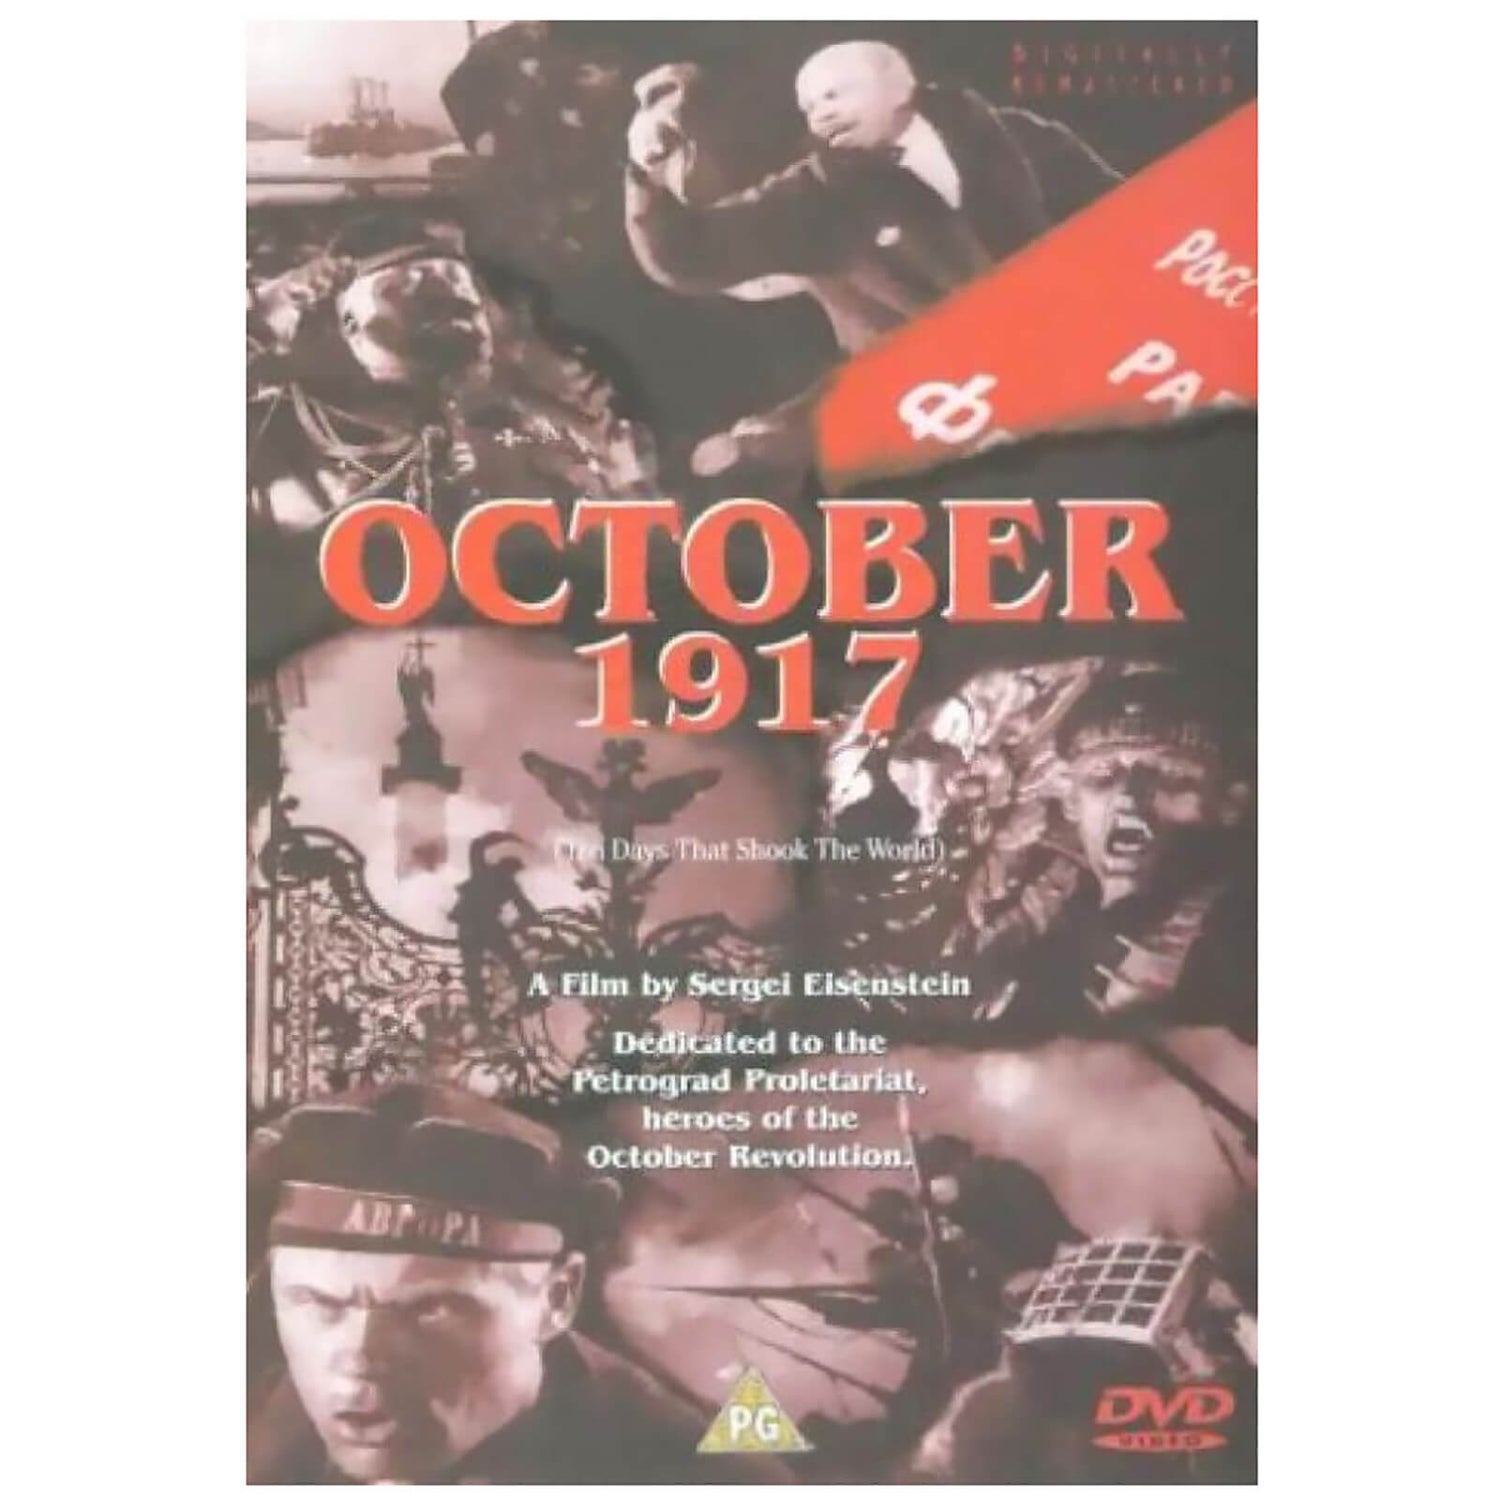 'OCTOBER 1917 (TEN DAYS THAT SHOOK THE WORLD)